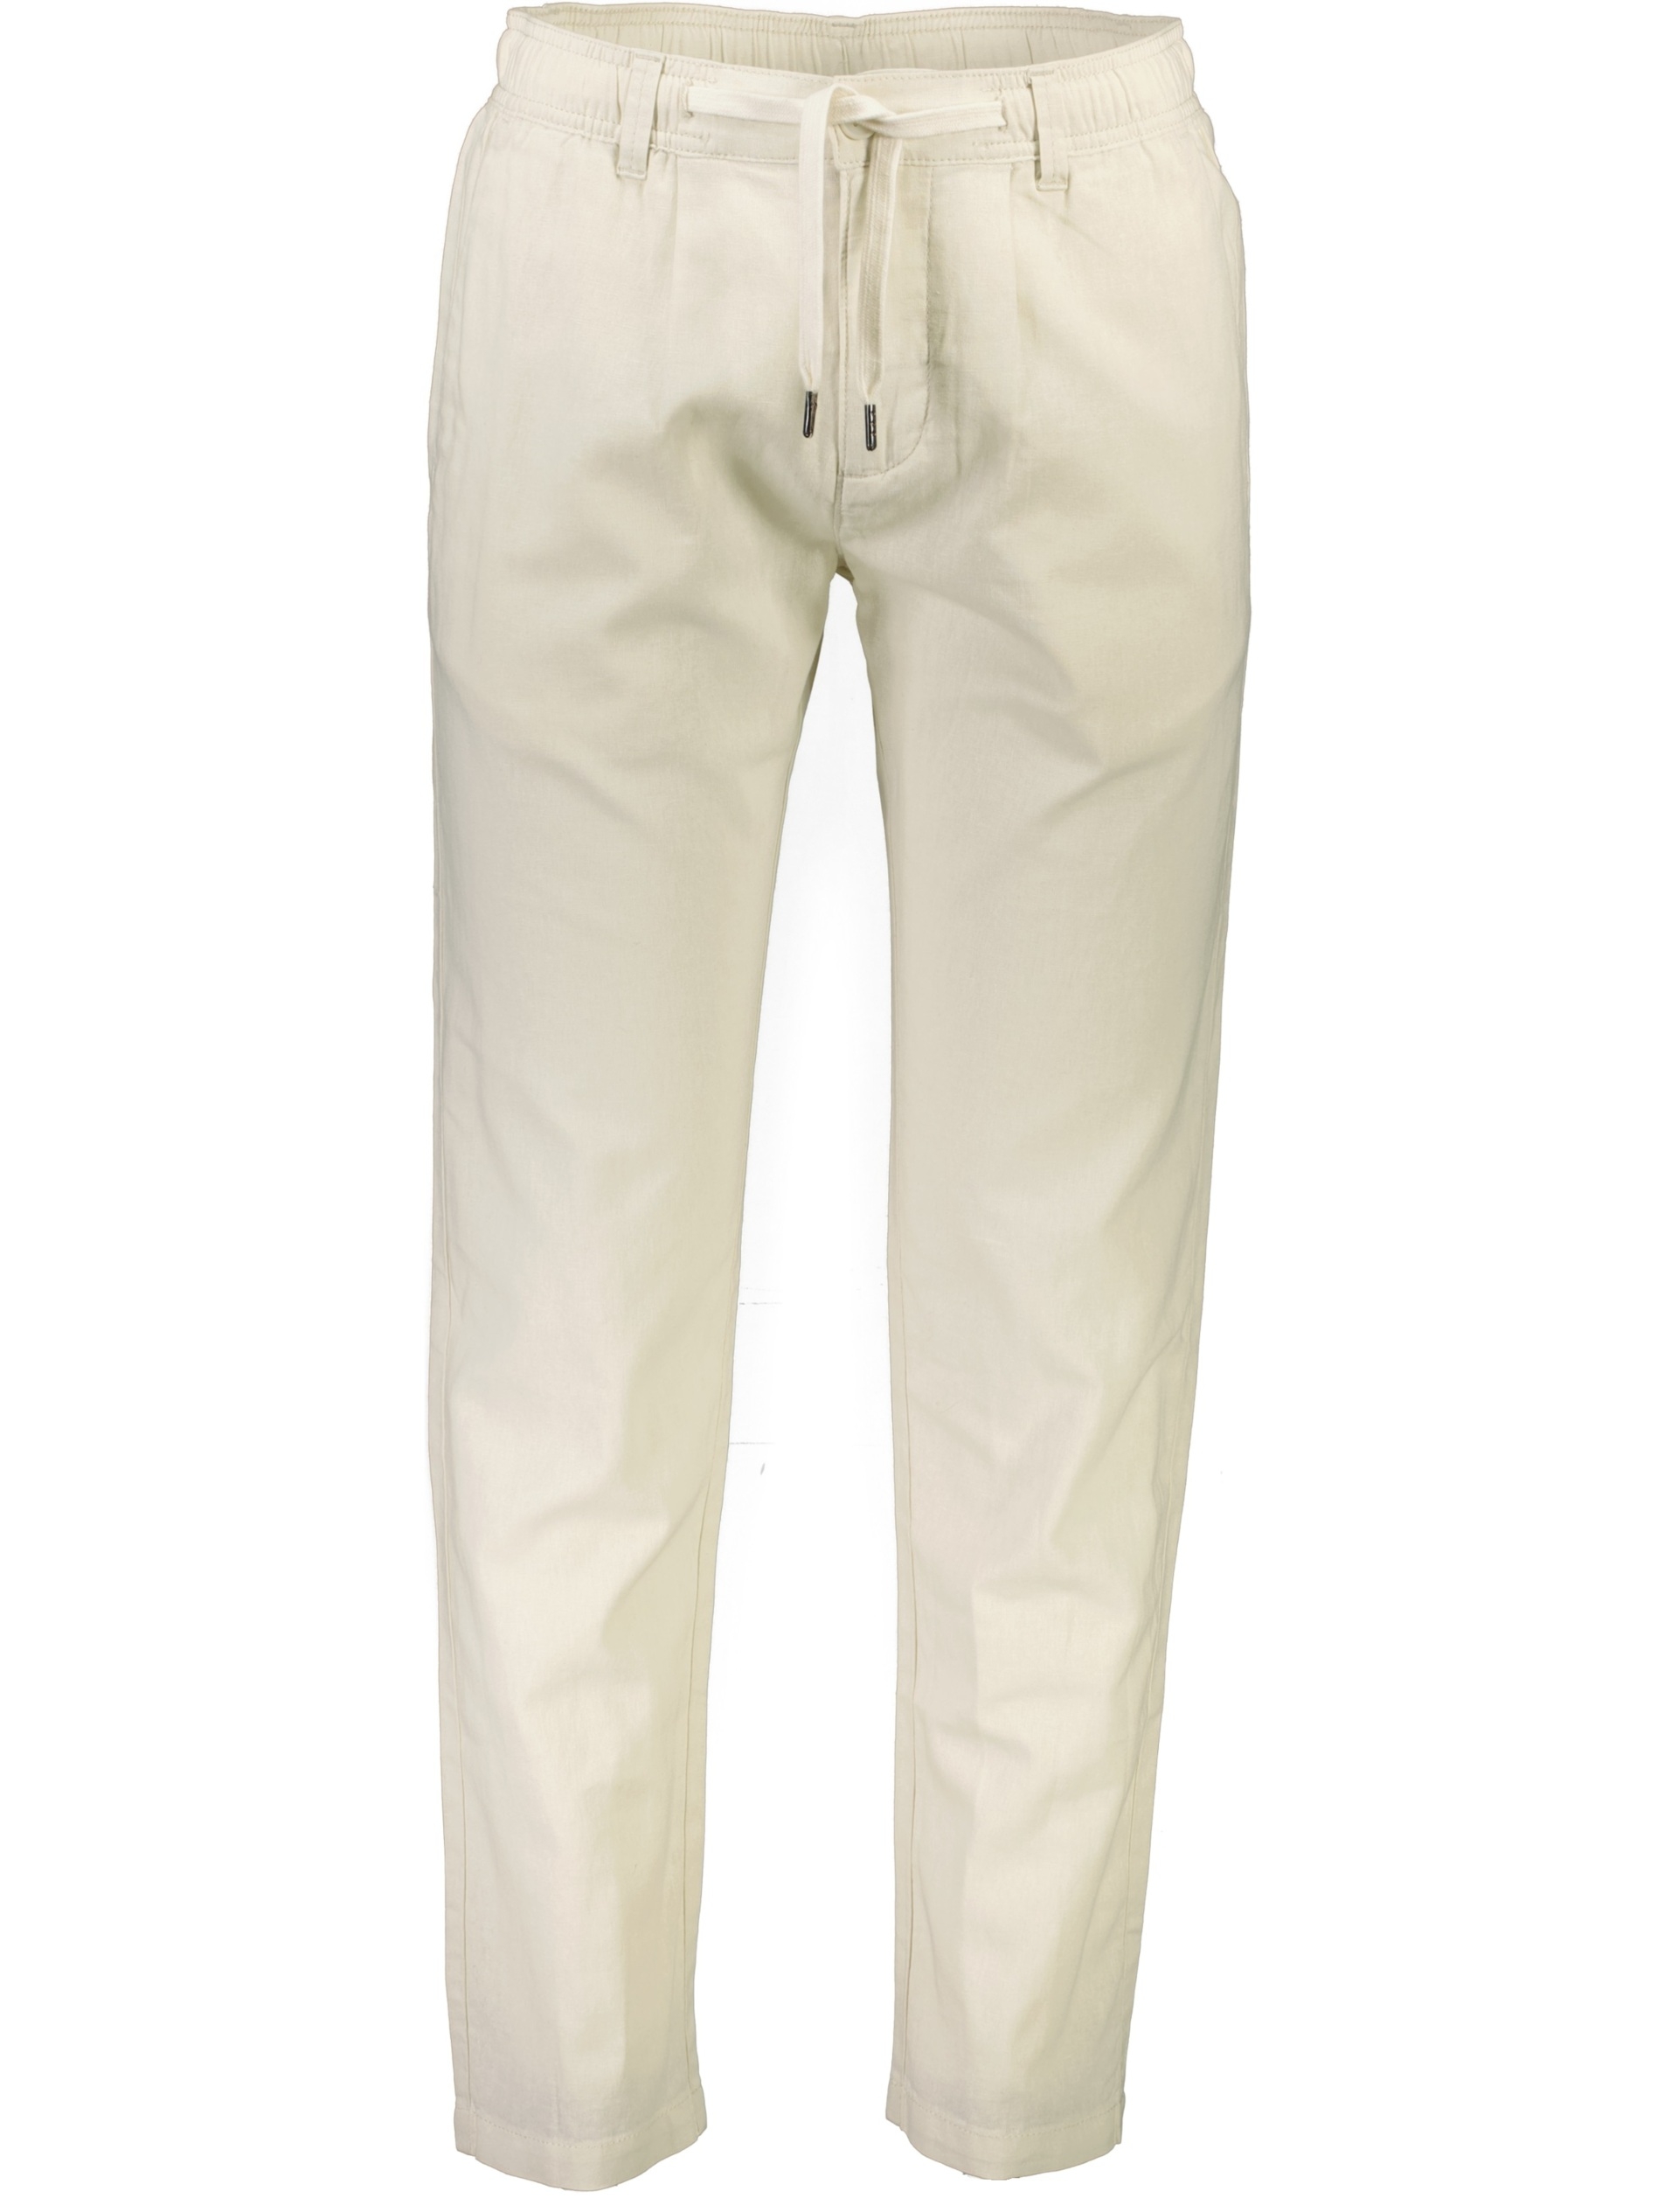 Lindbergh Linen pants grey / lt grey